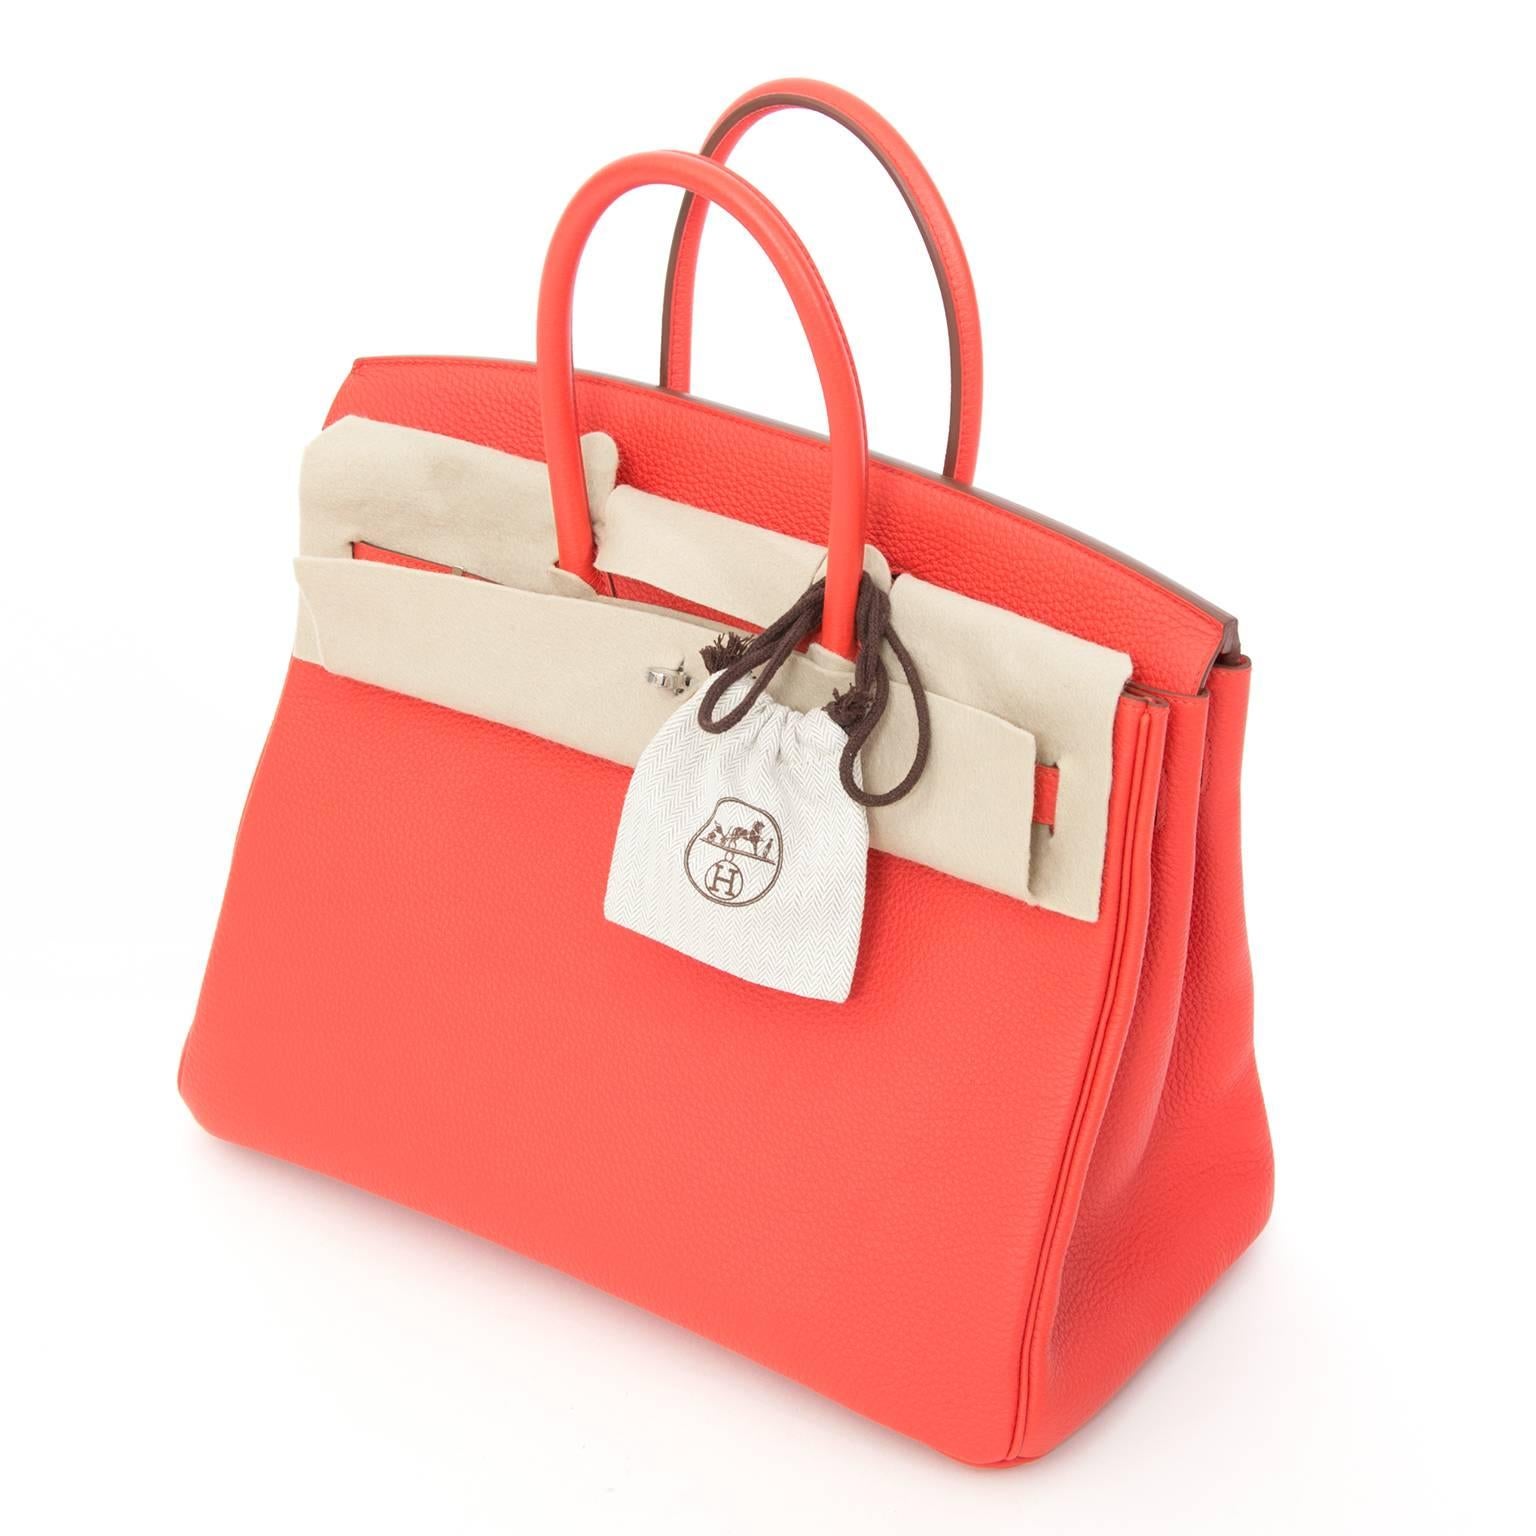 BRAND NEW Hermès Birkin Bag Togo Capucine PHW 35cm  3